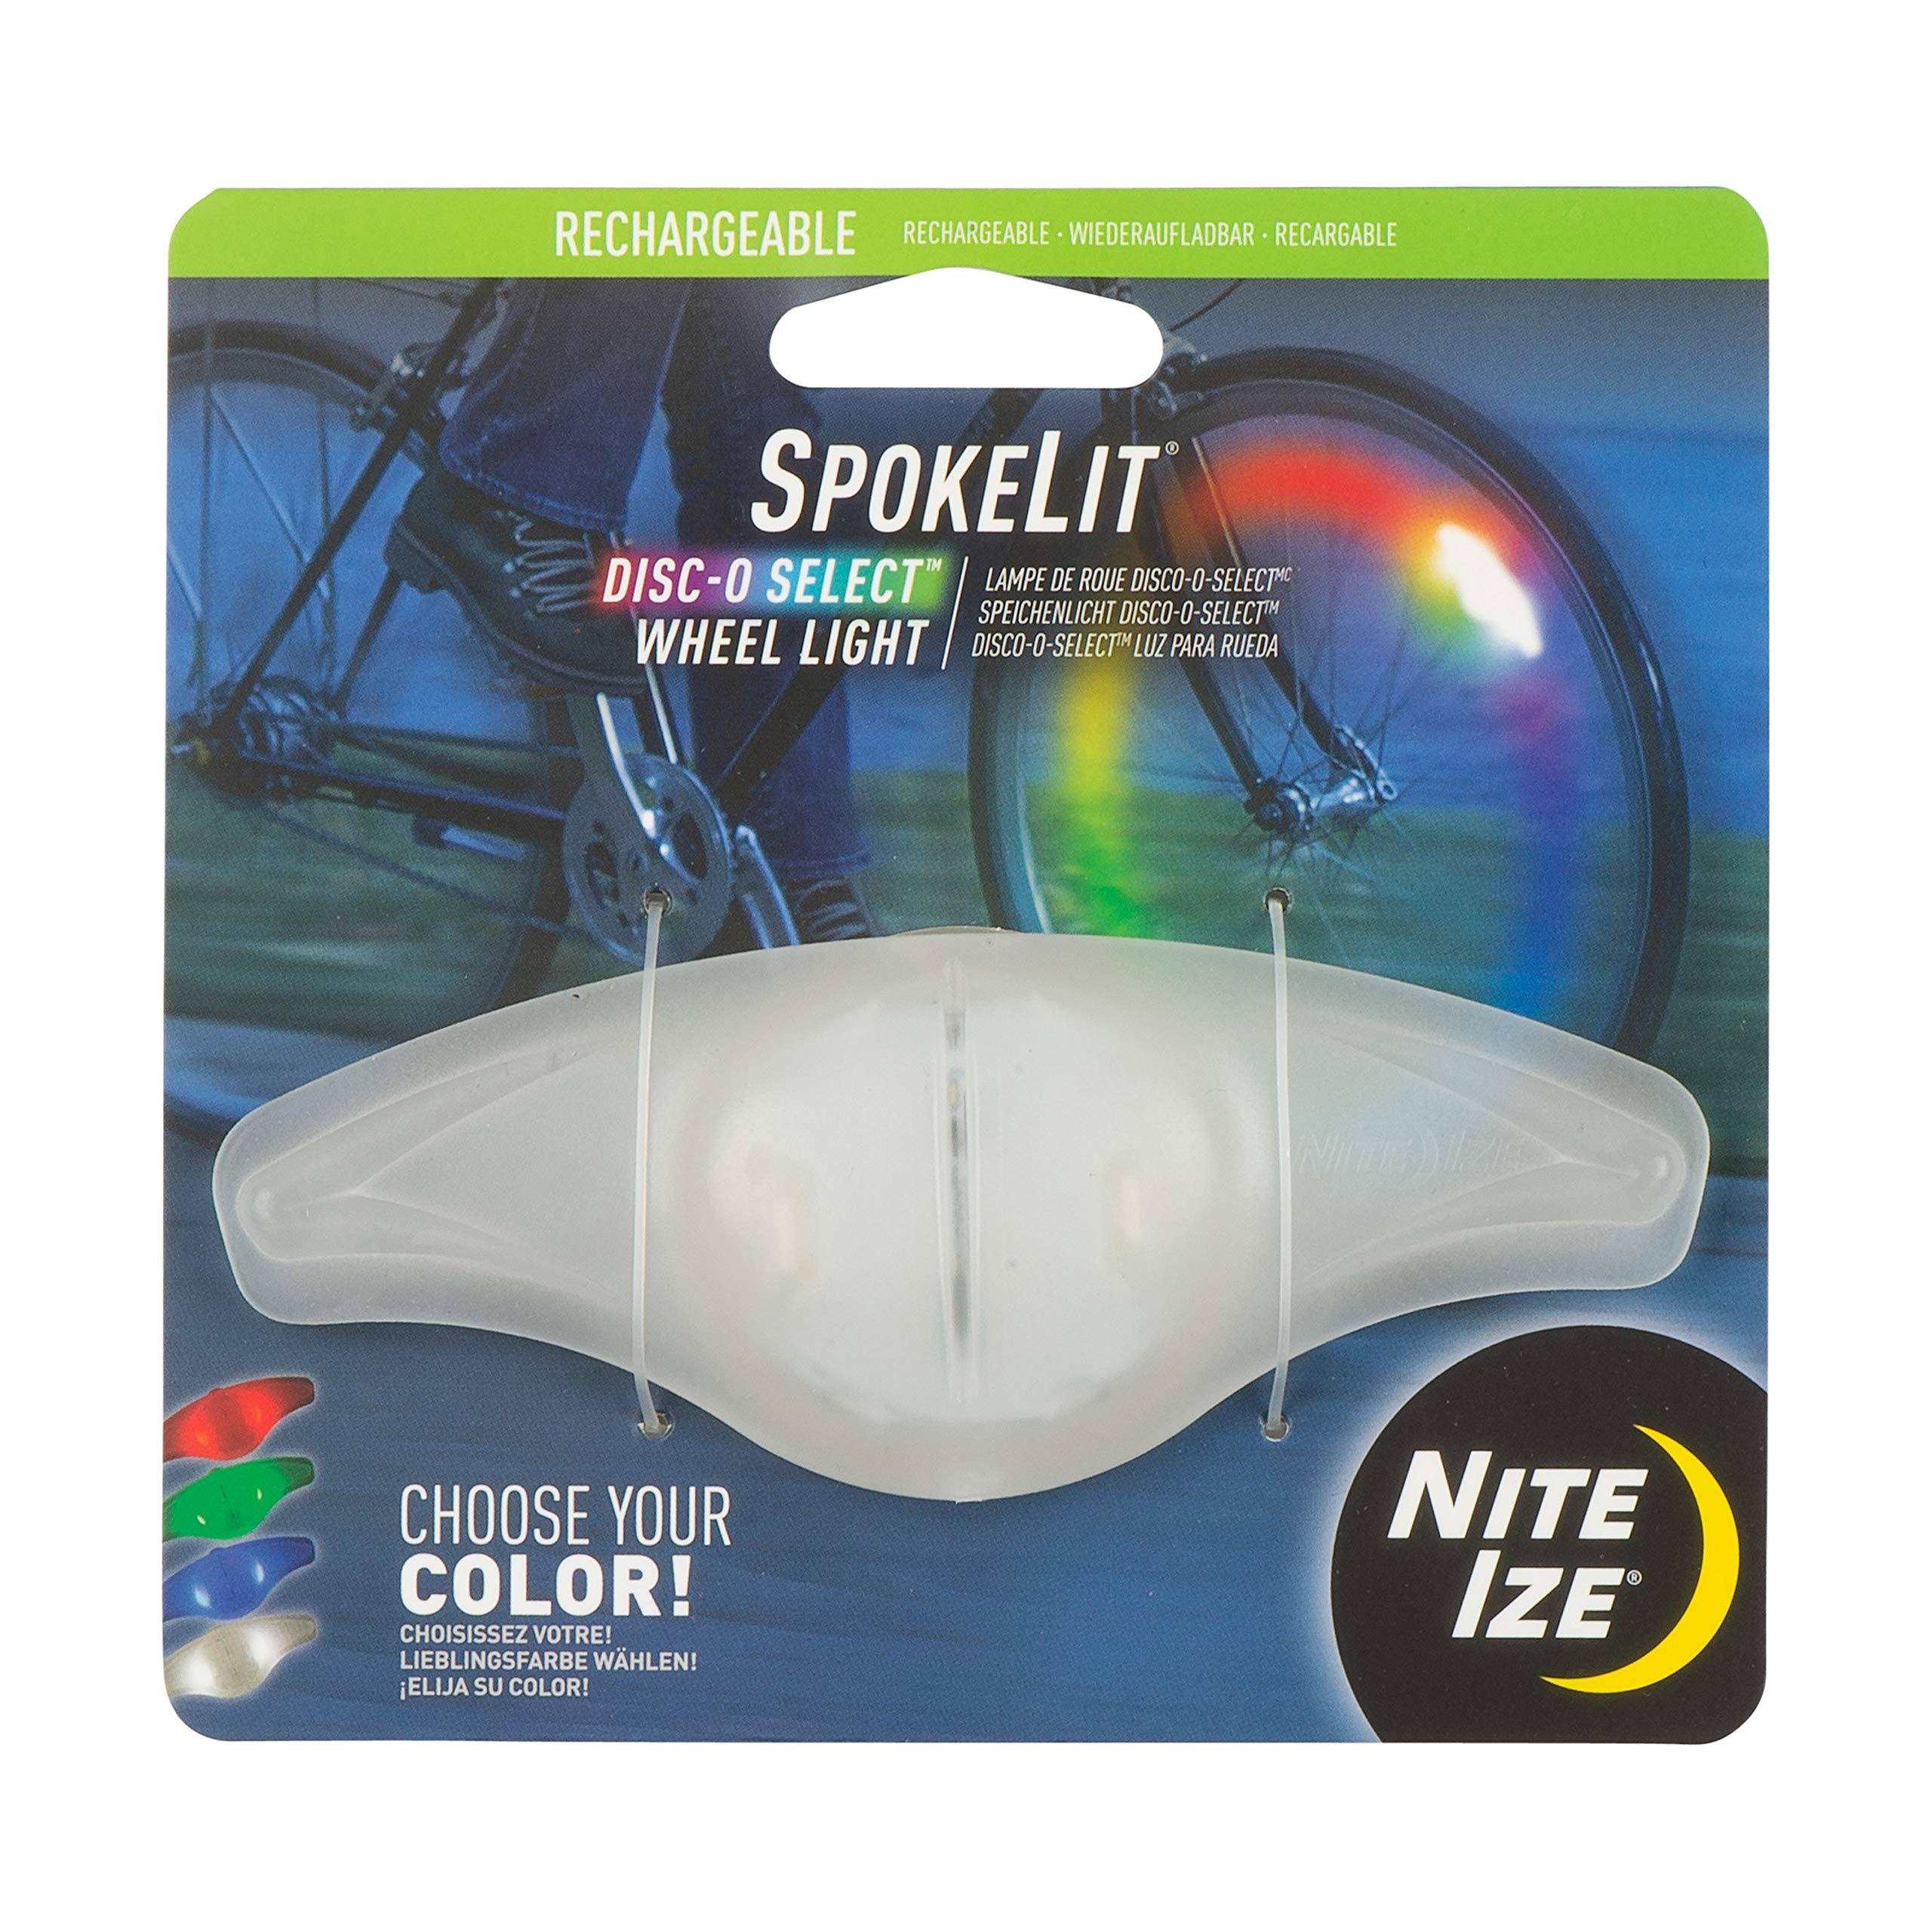 Nite Ize SpokeLit Disc-O Select Rechargeable Wheel Light